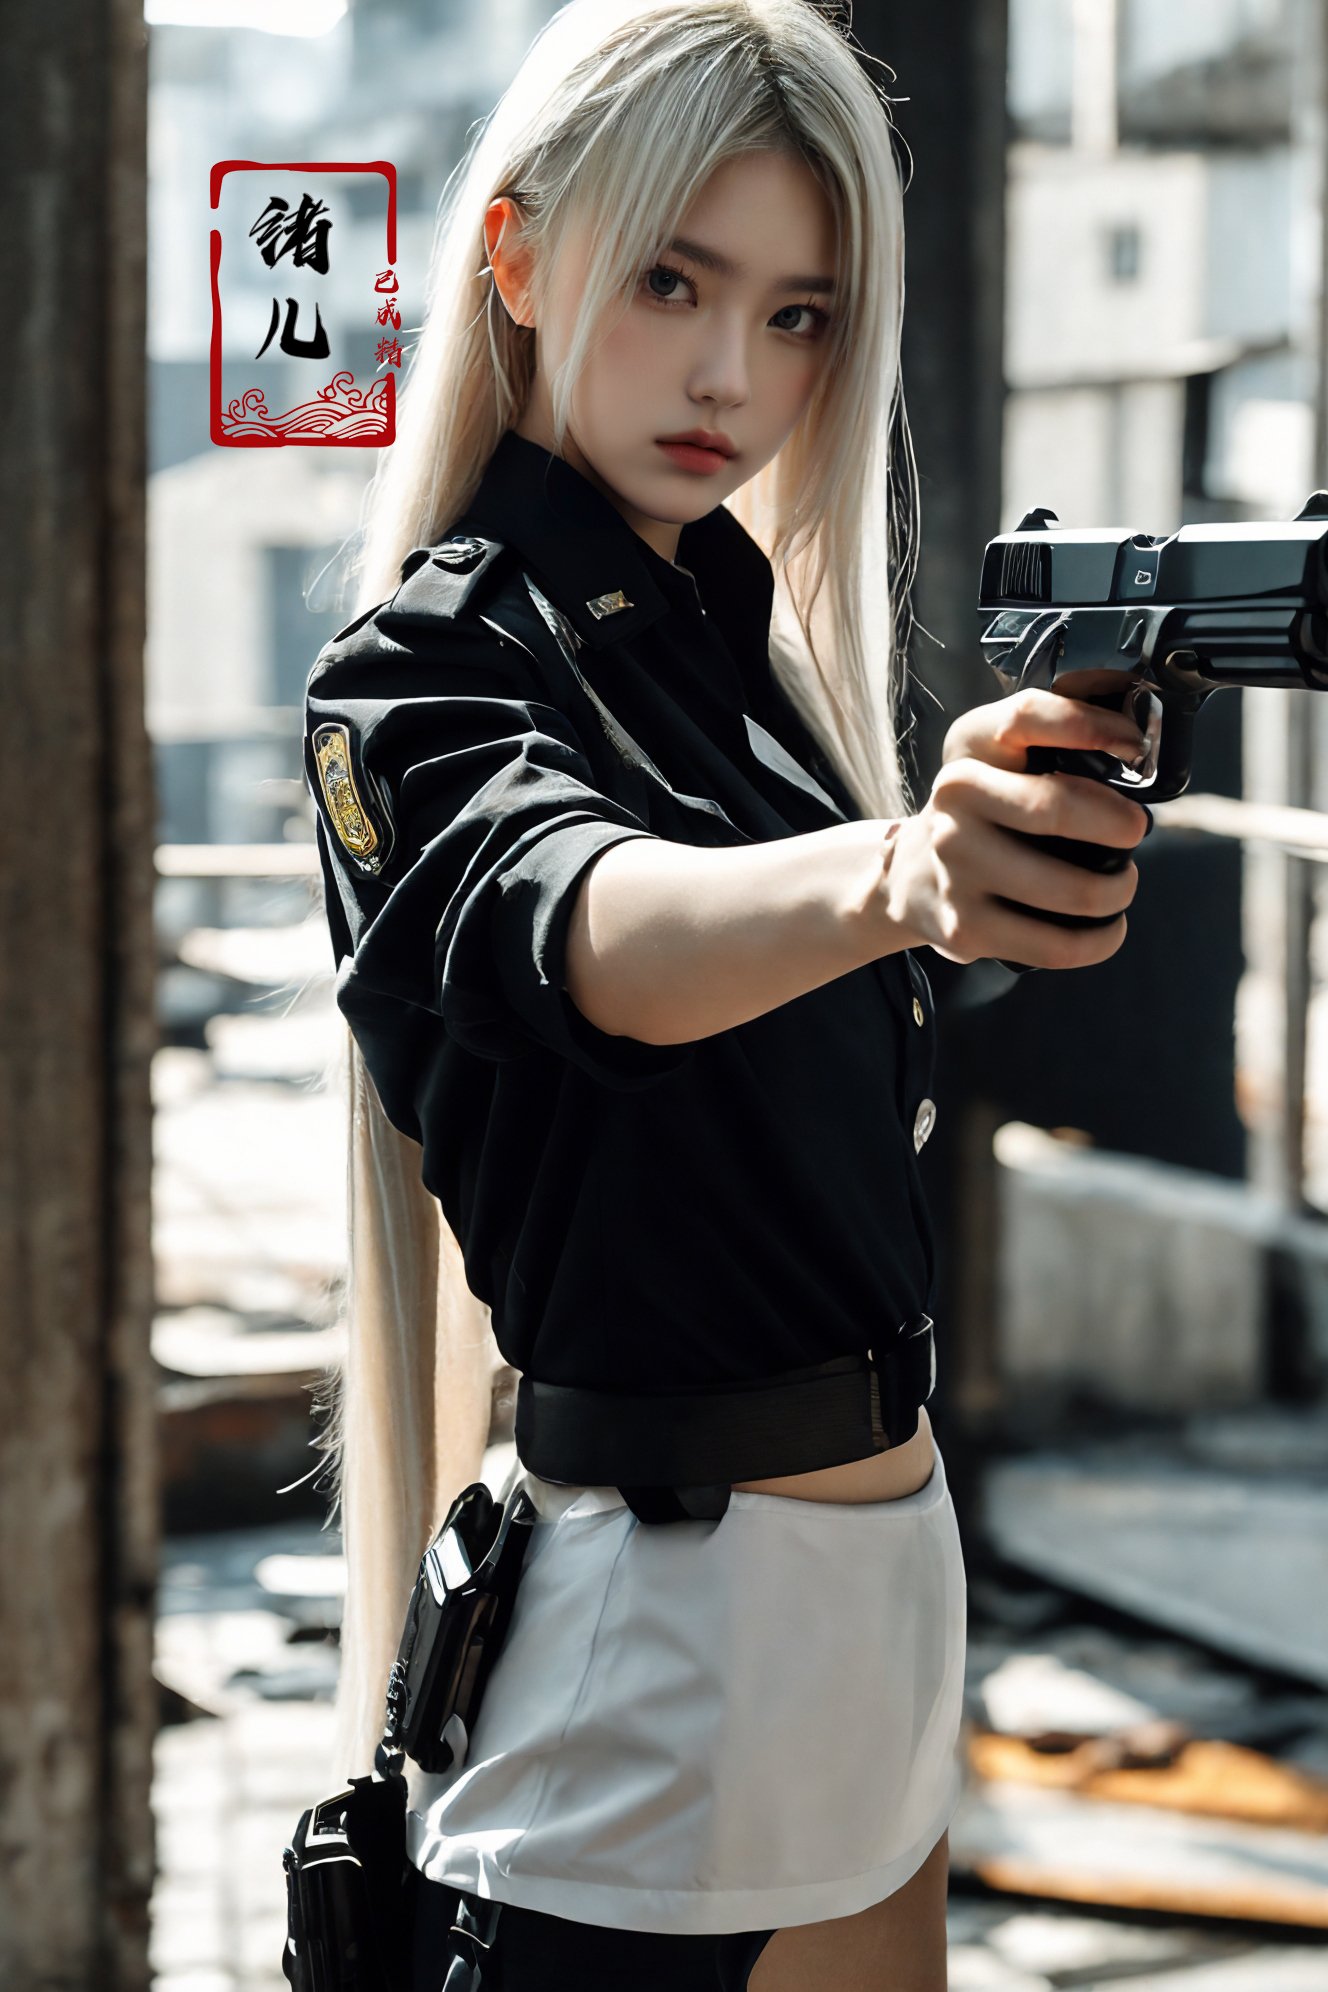 xuer pistol,<lora:绪儿-手枪 xuer pistol:0.8>absurdly long hair,platinum blonde hair,police_uniform,